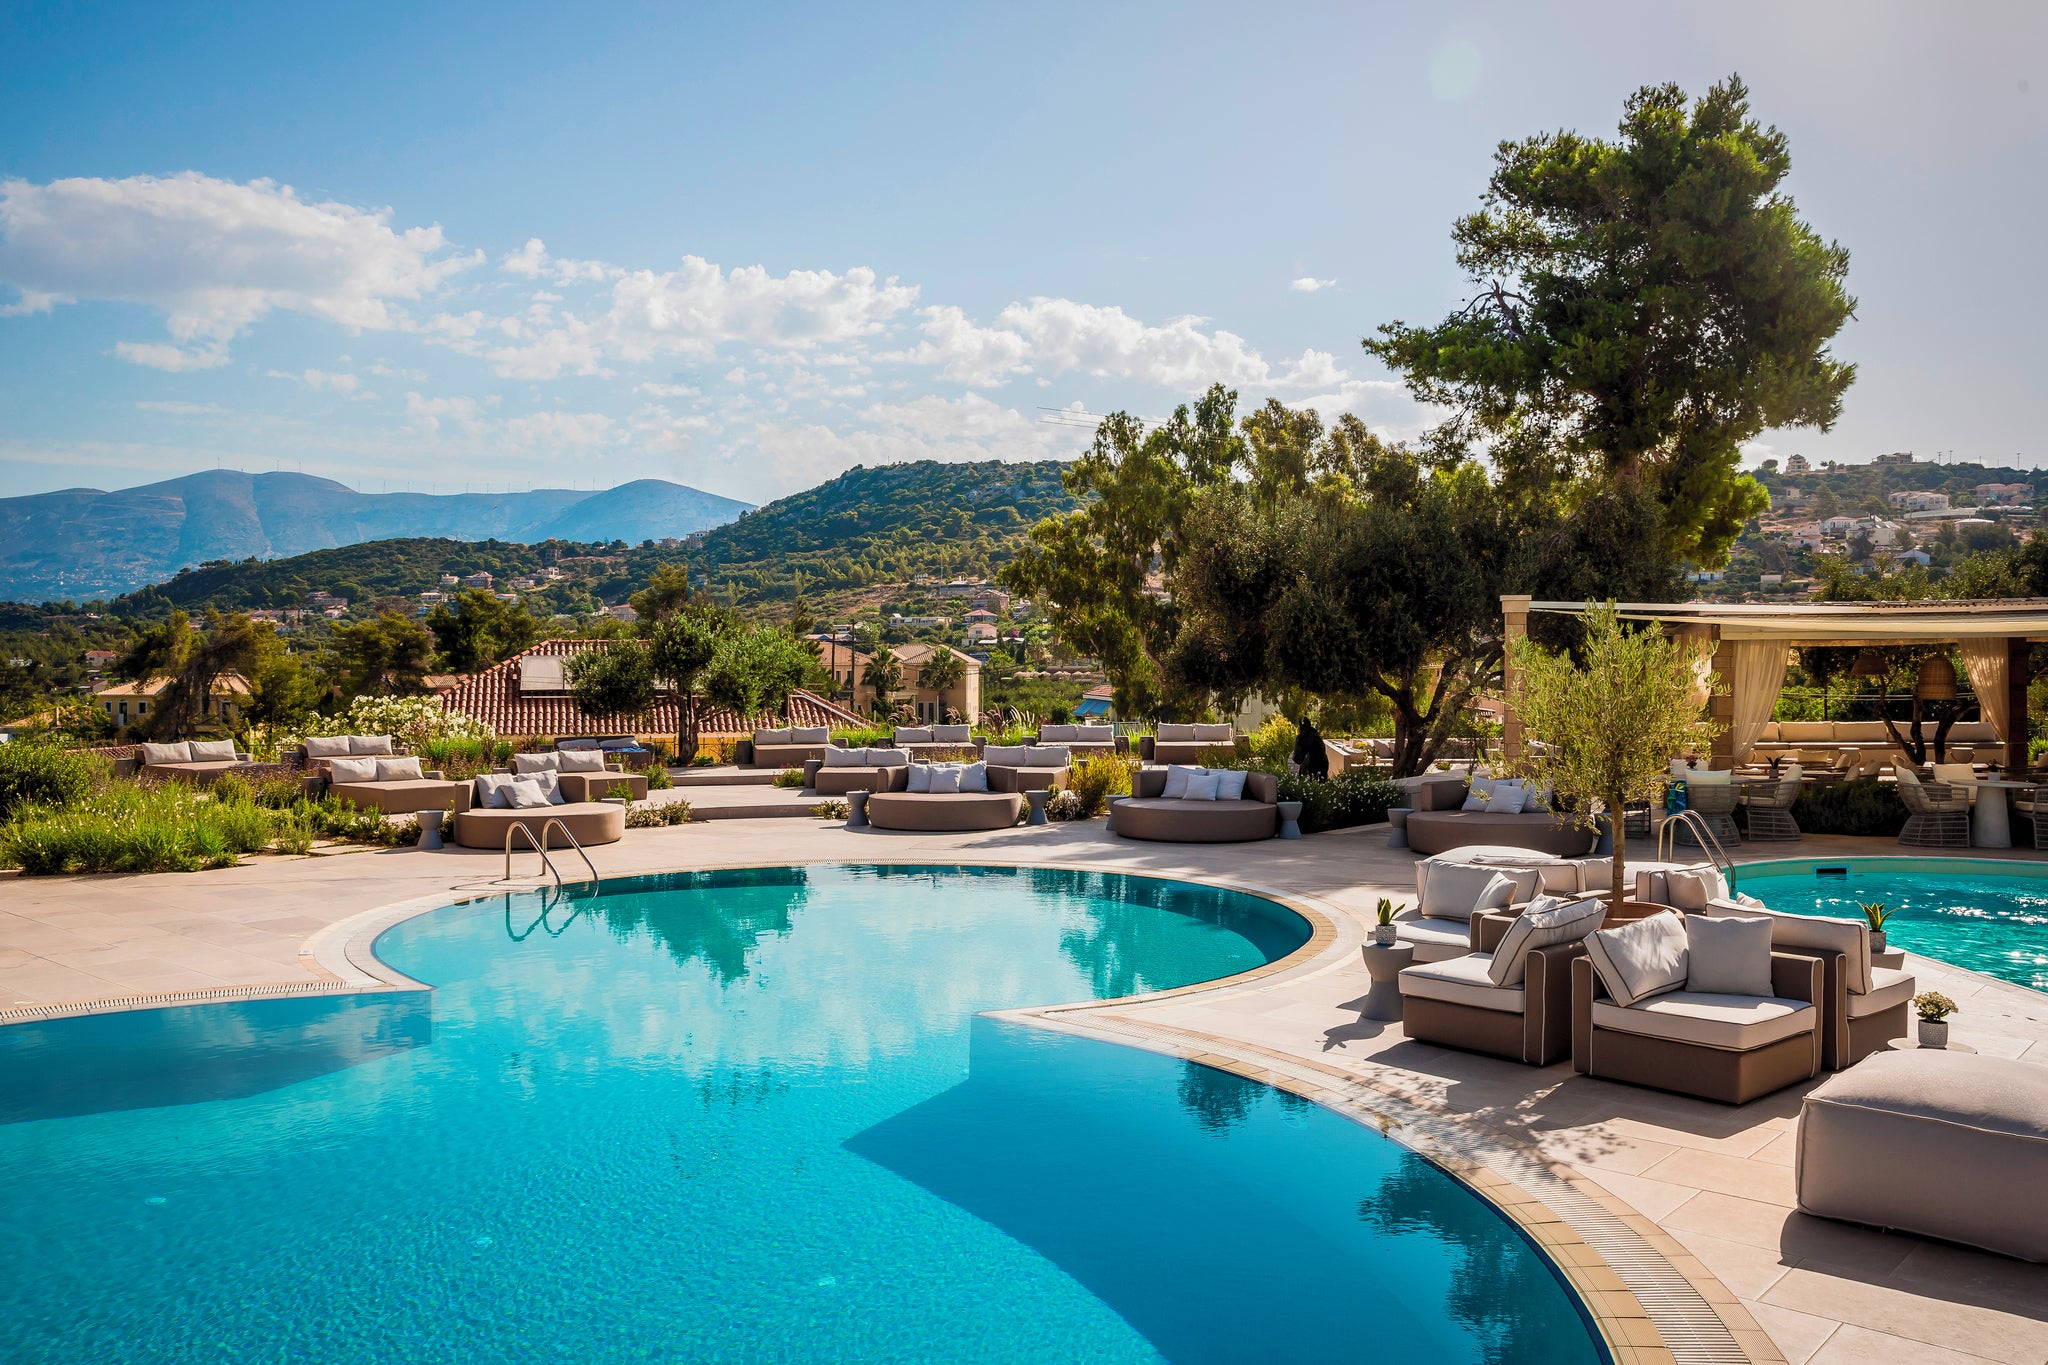 Enjoy gorgeous pools and idyllic views at Kefalonia’s Thalassa Boutique Hotel